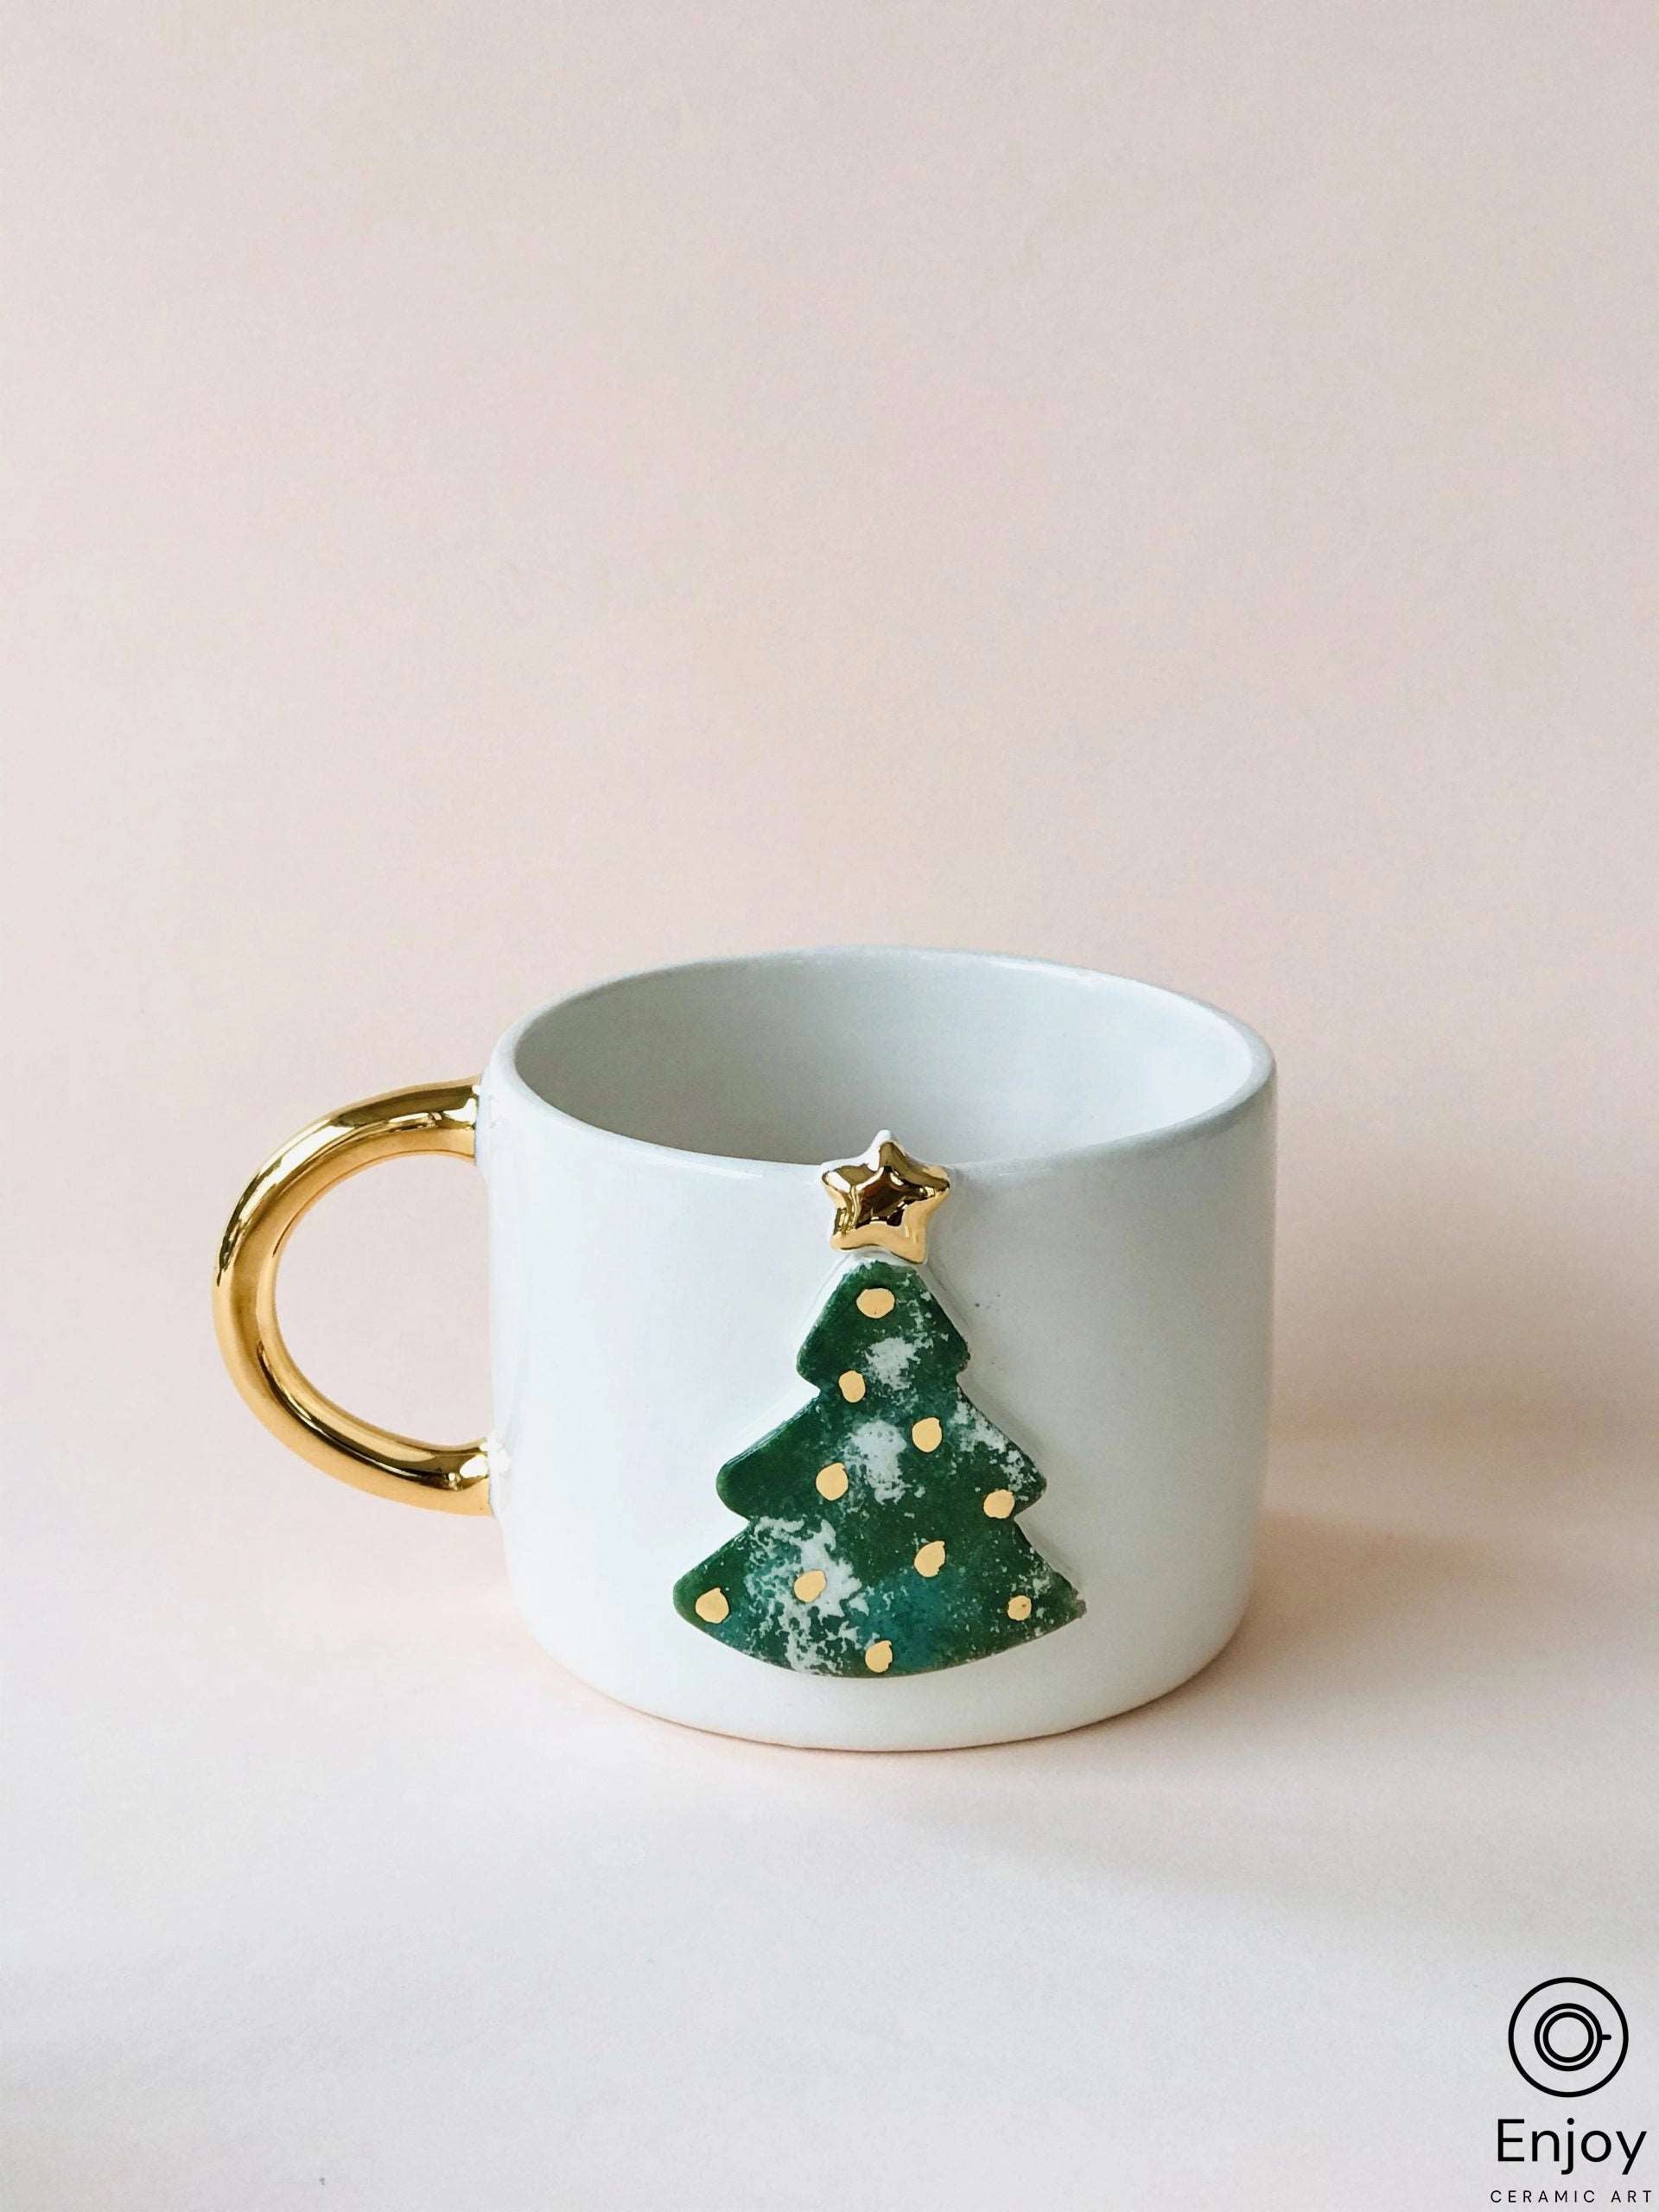 Handcrafted Christmas Tree Ceramic Coffee Mug - Unique Holiday